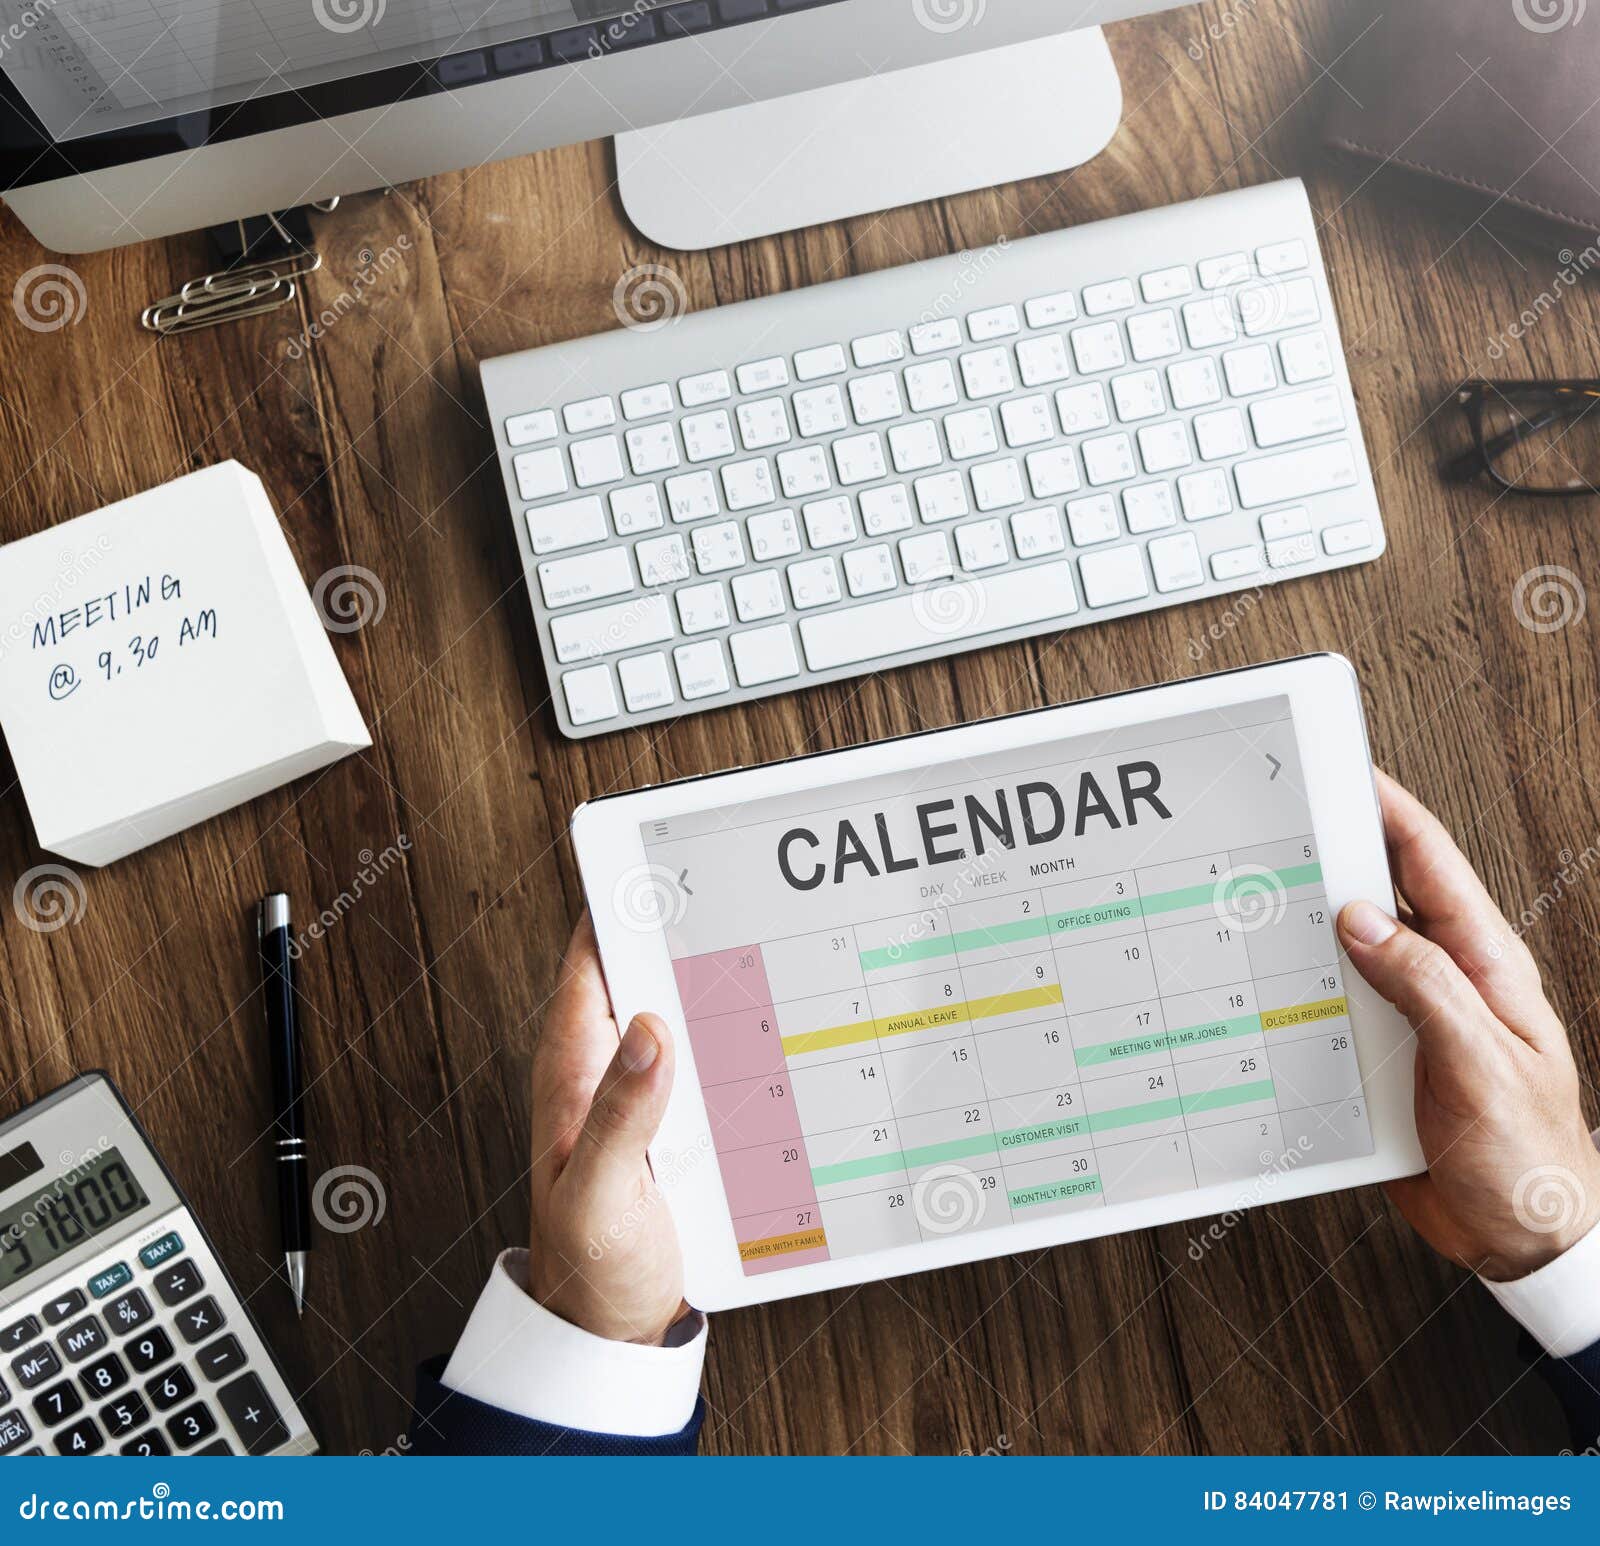 Calendar Agenda Event Meeting Reminder Schedule Graphic Concept Stock